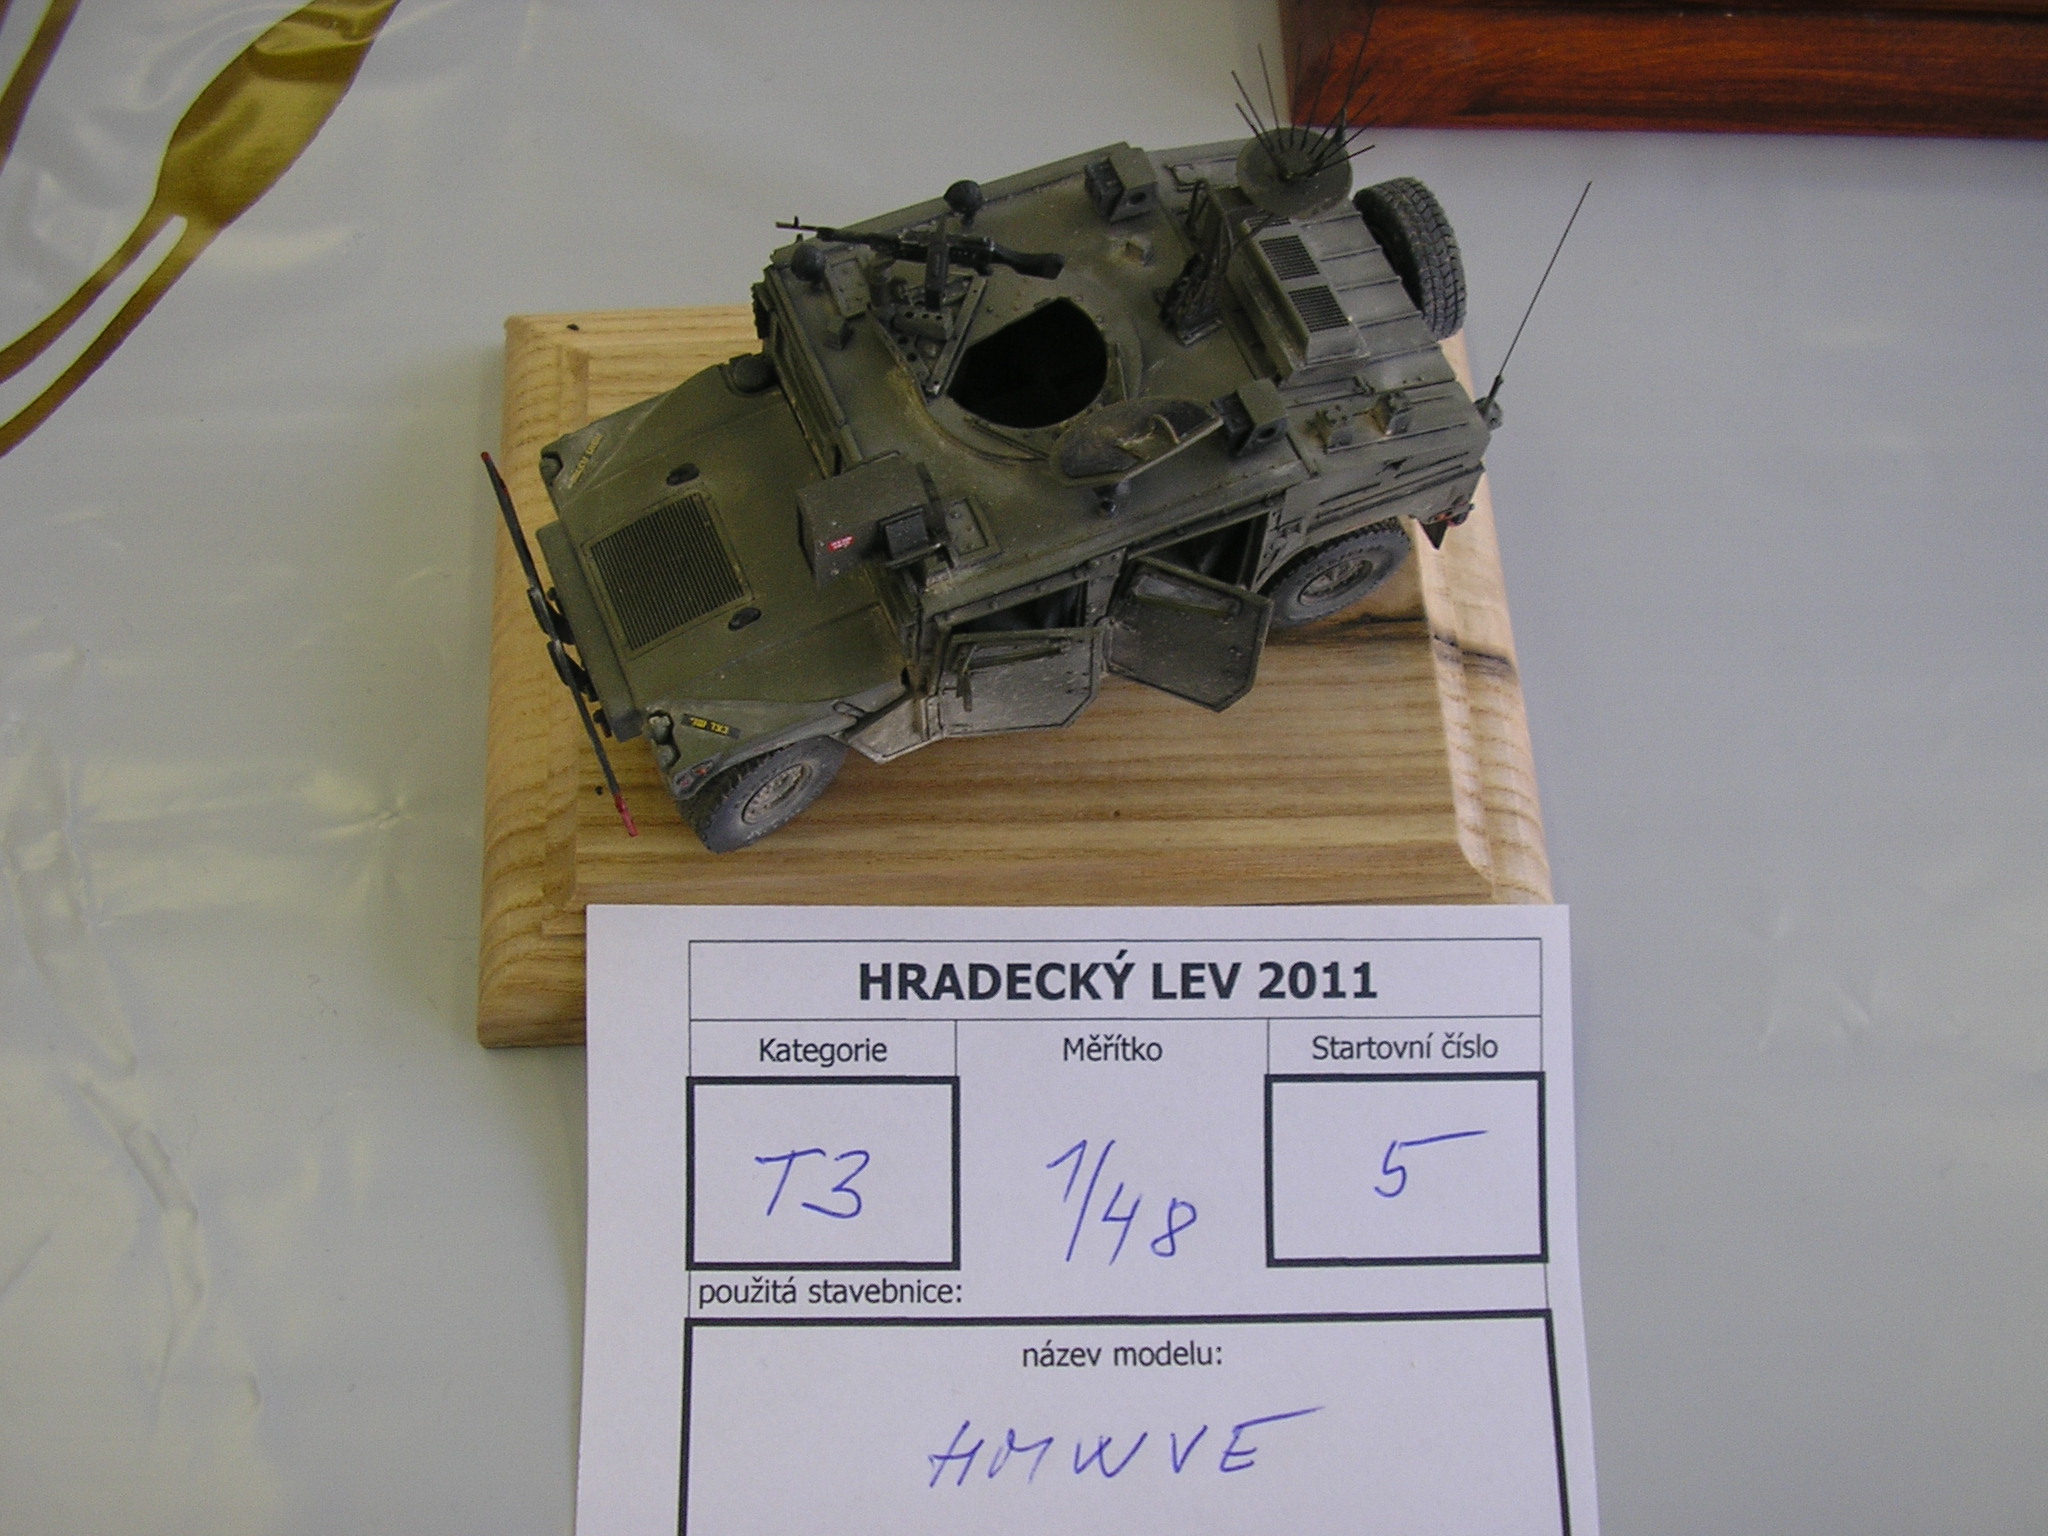 Hradec11 VT48 HMWVE